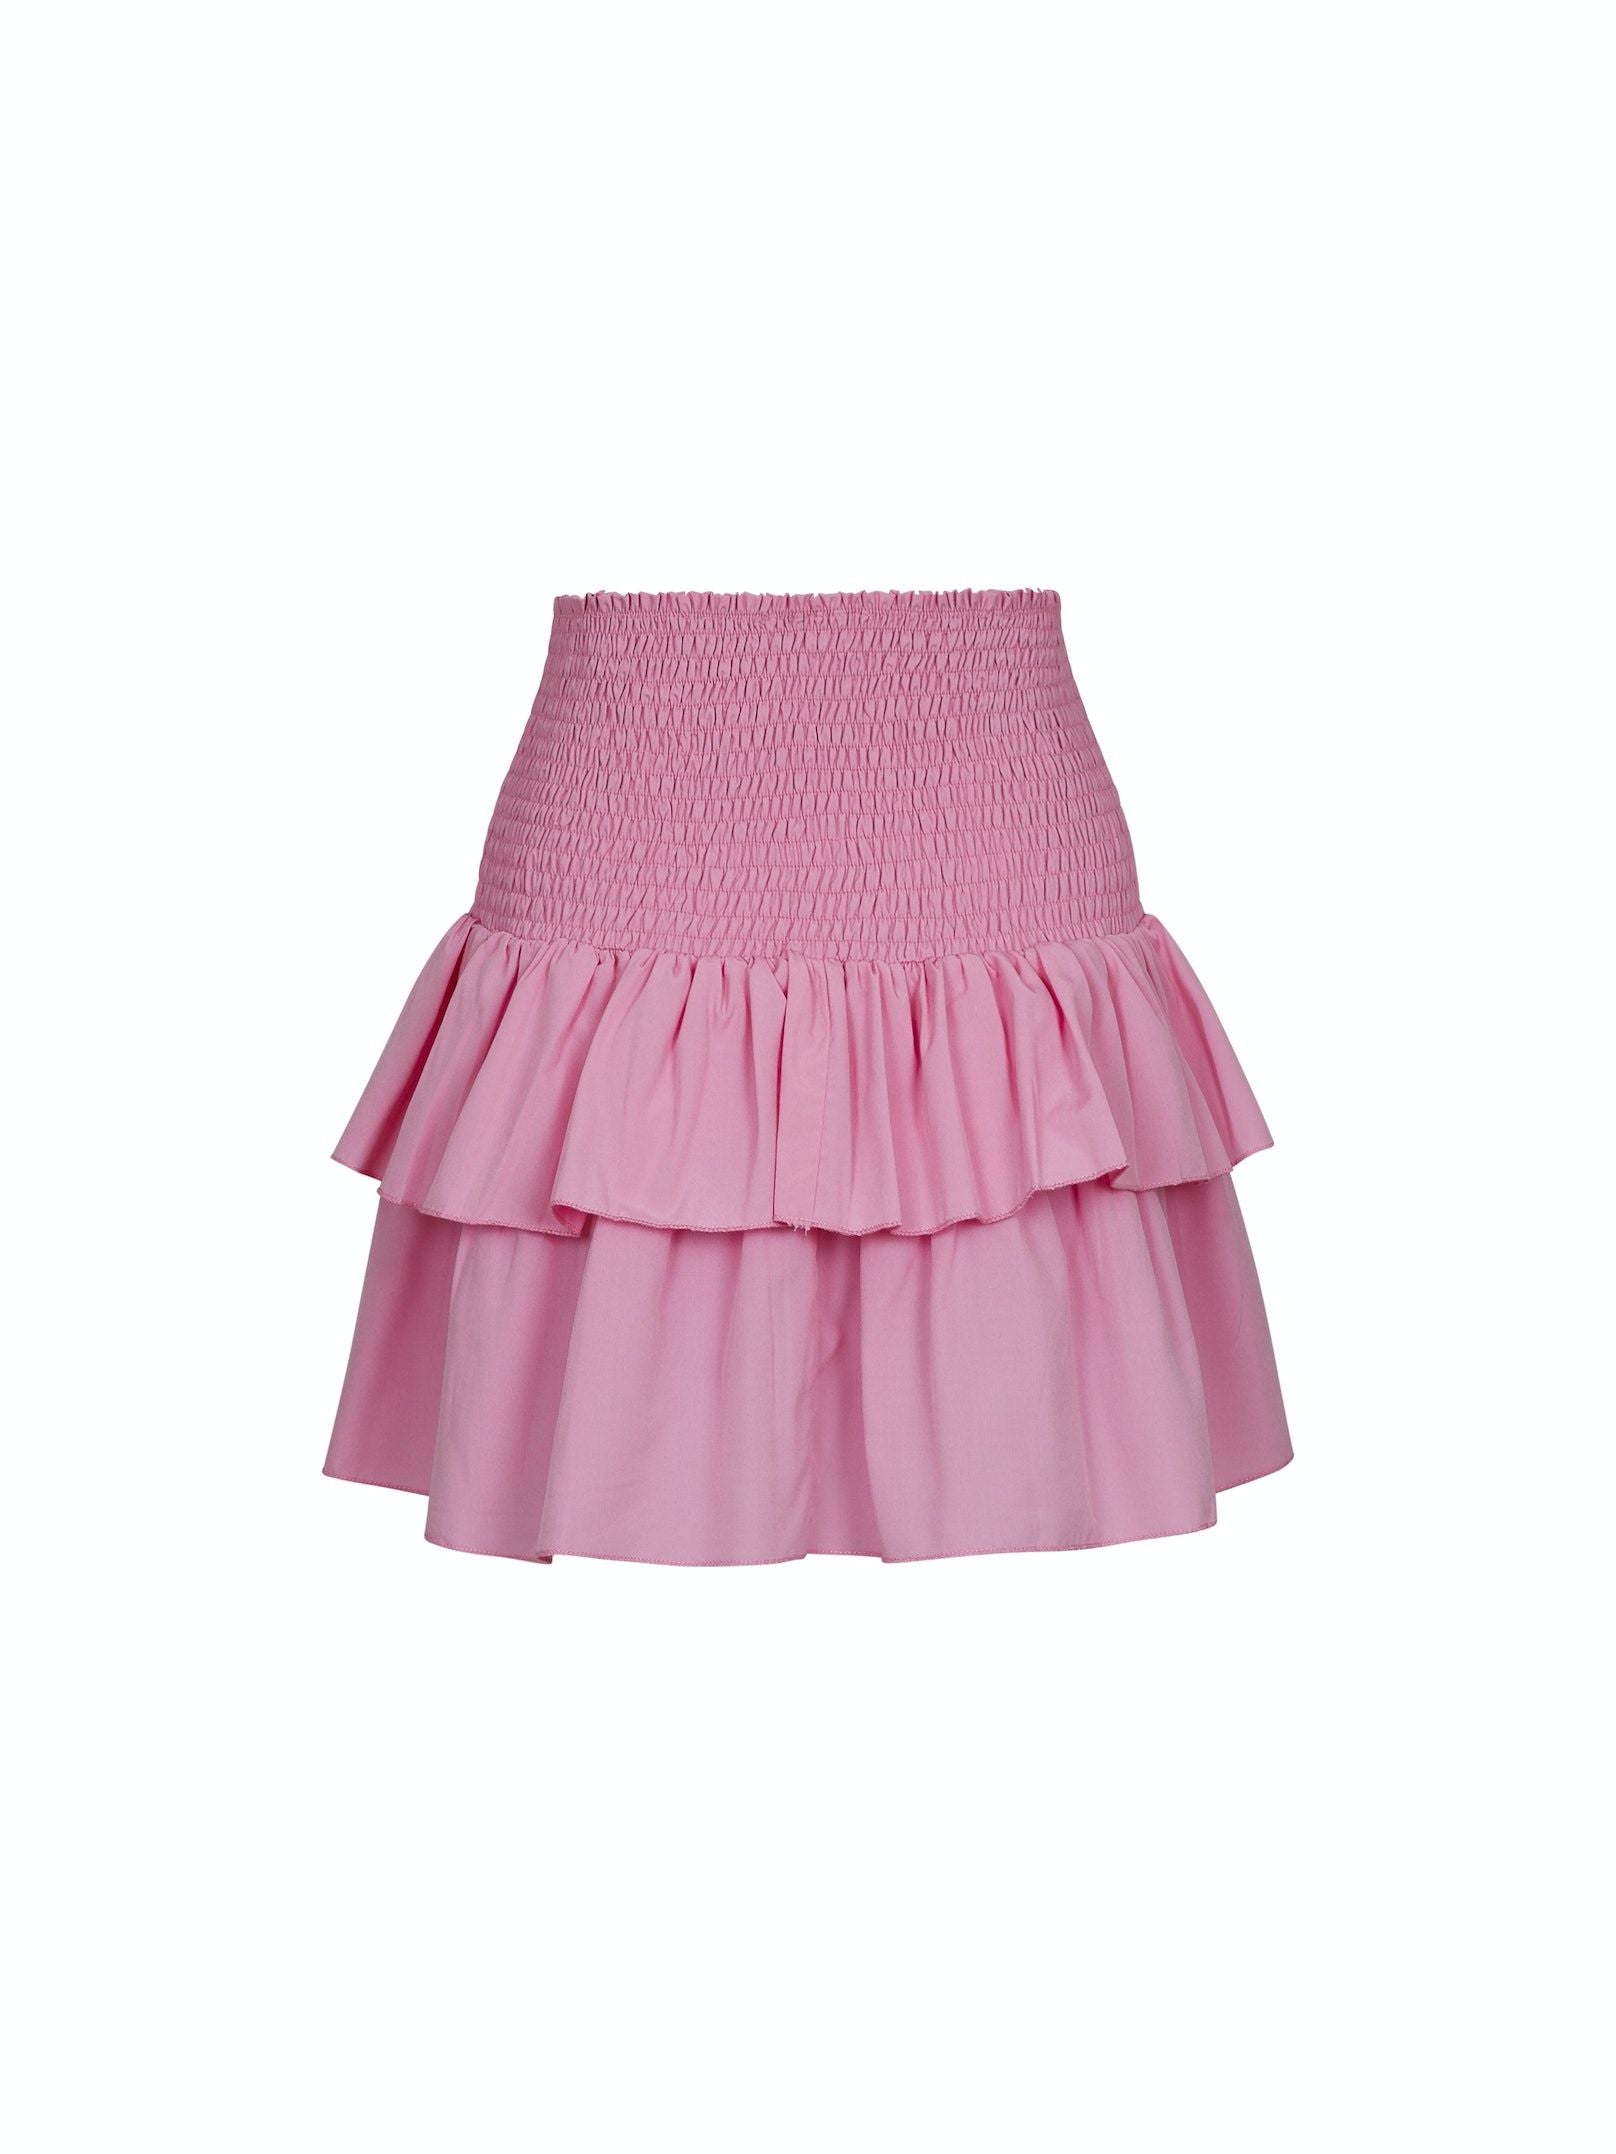 Carin Skirt Pink